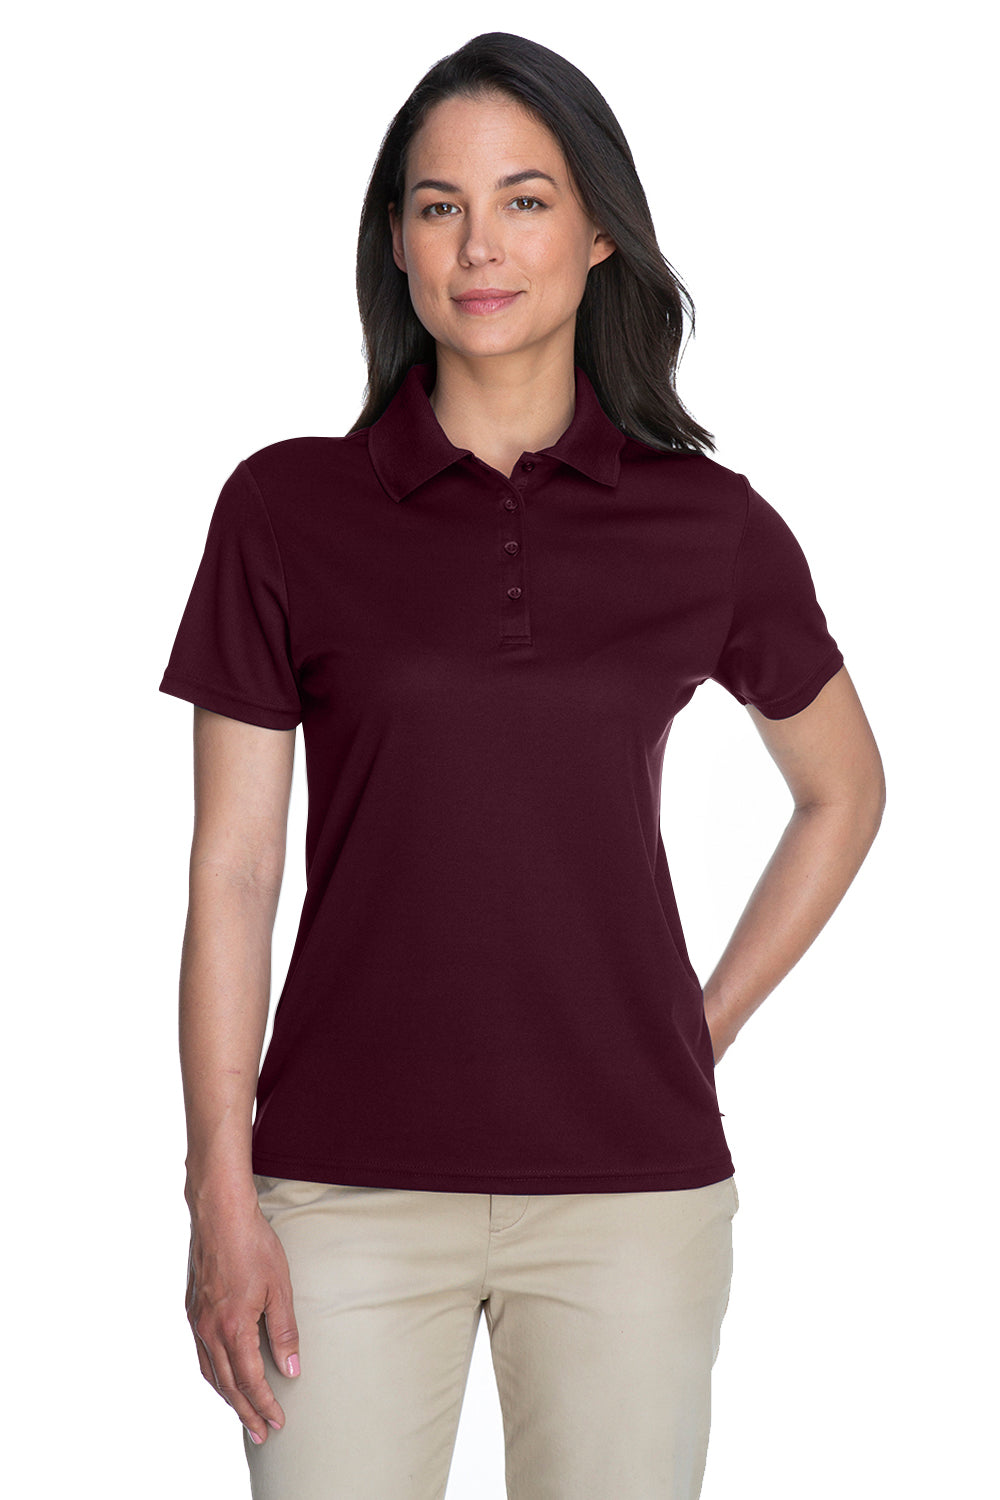 Core 365 78181 Womens Origin Performance Moisture Wicking Short Sleeve Polo Shirt Burgundy Front